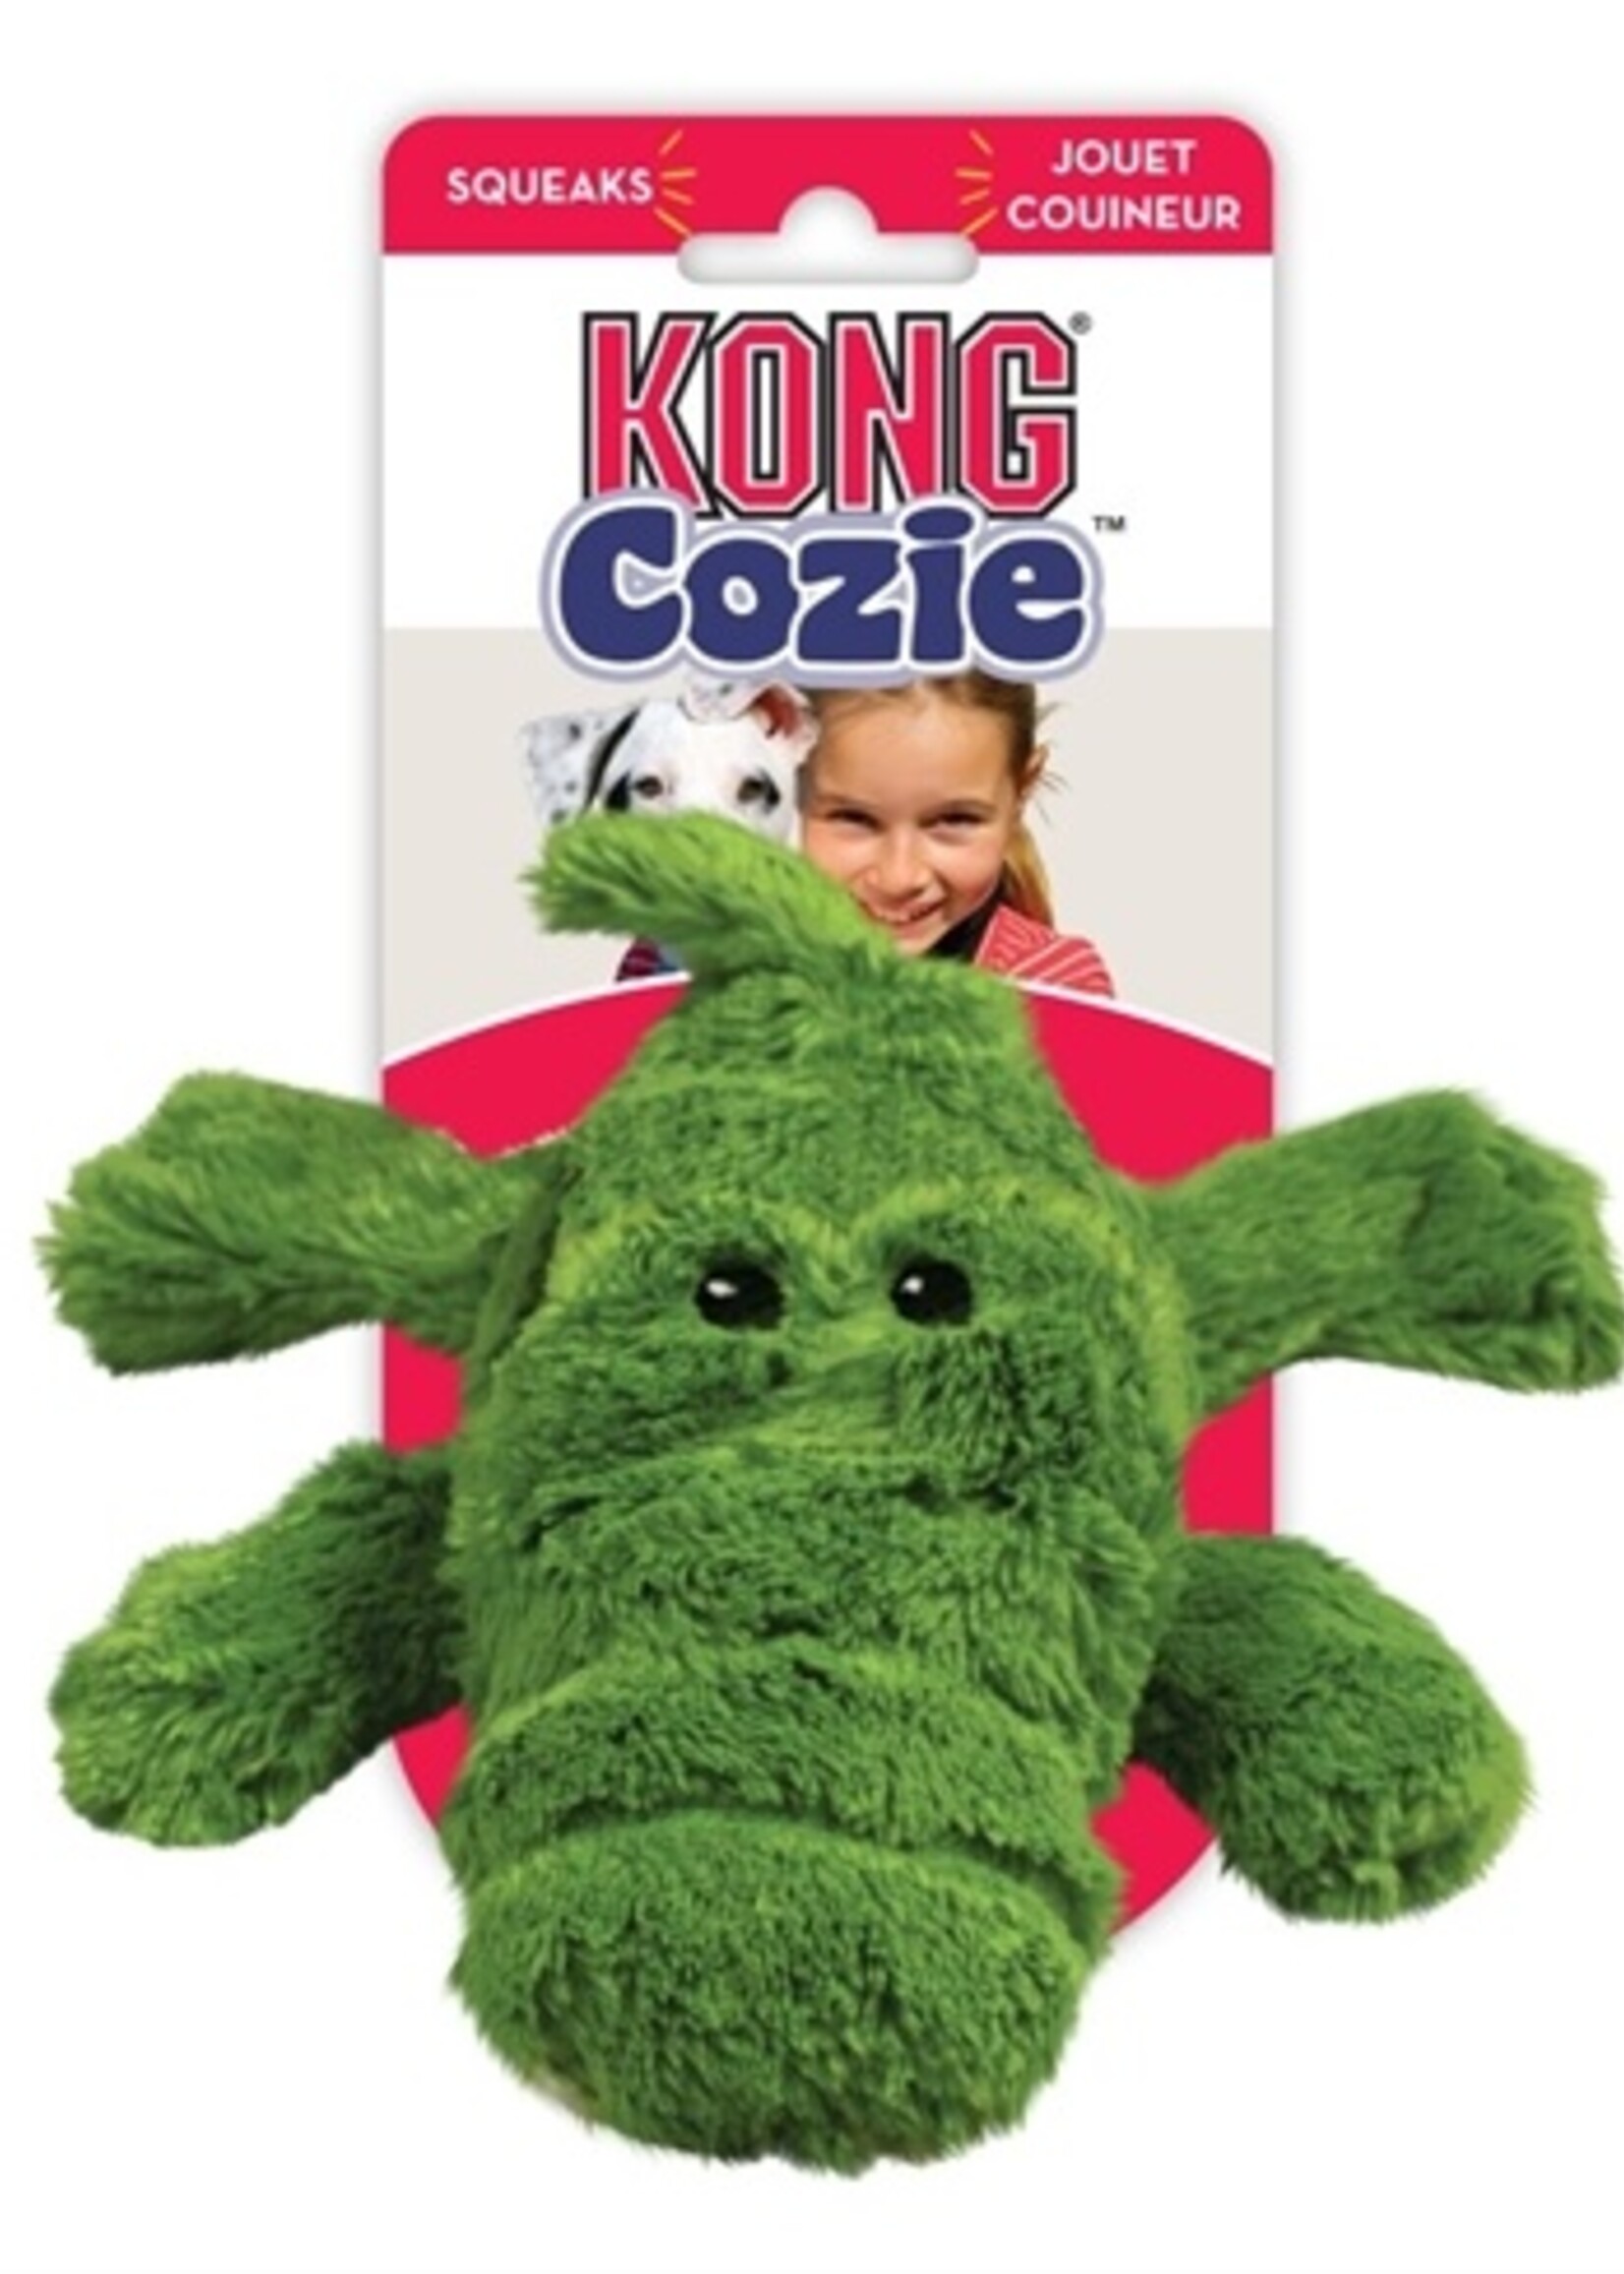 Kong Kong cozie ali alligator